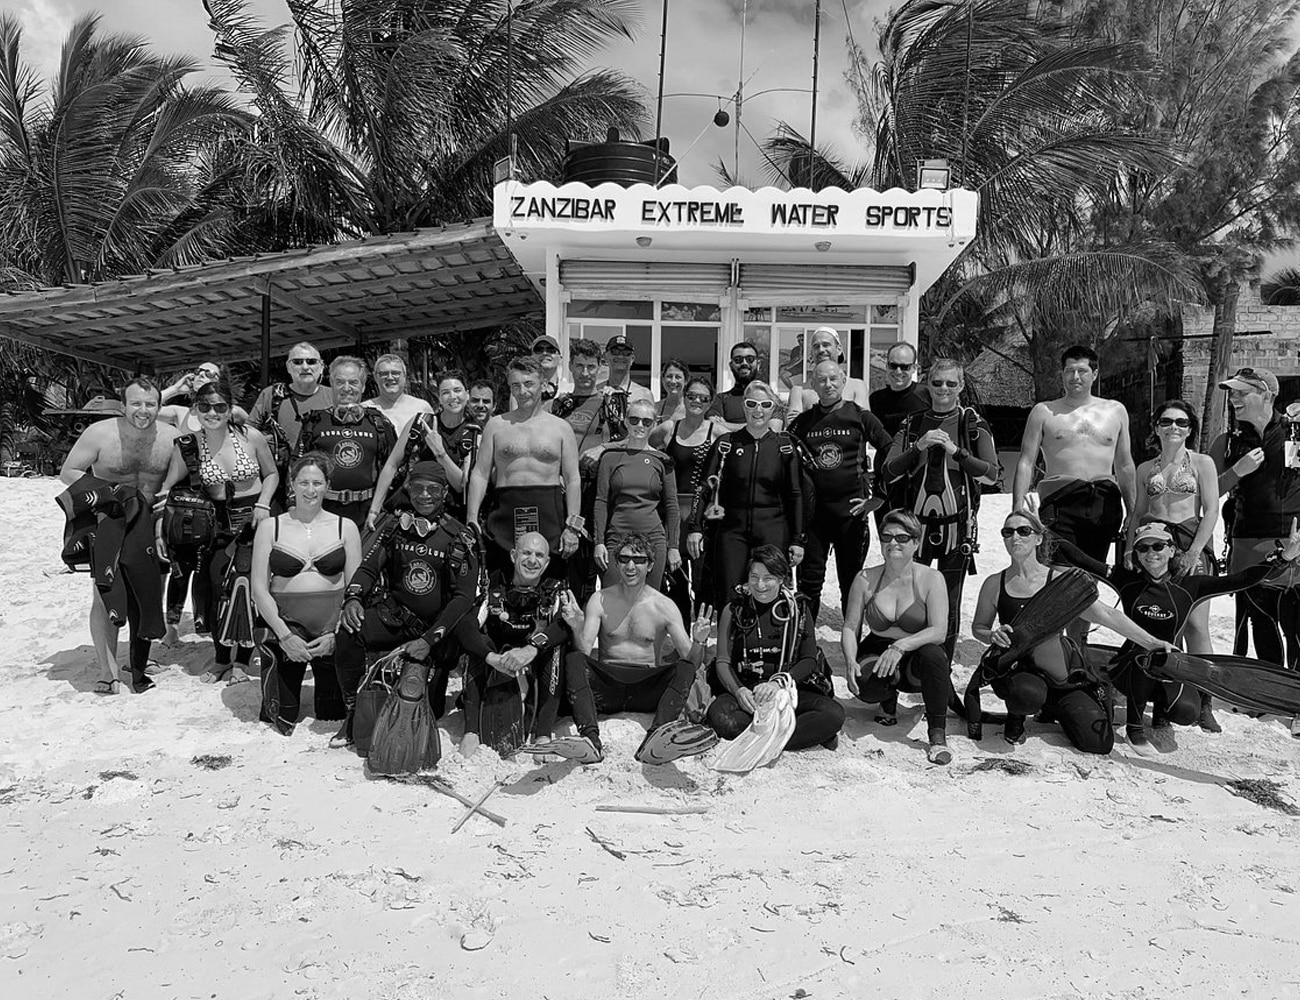 People at Zanzibar Extreme Water Sports